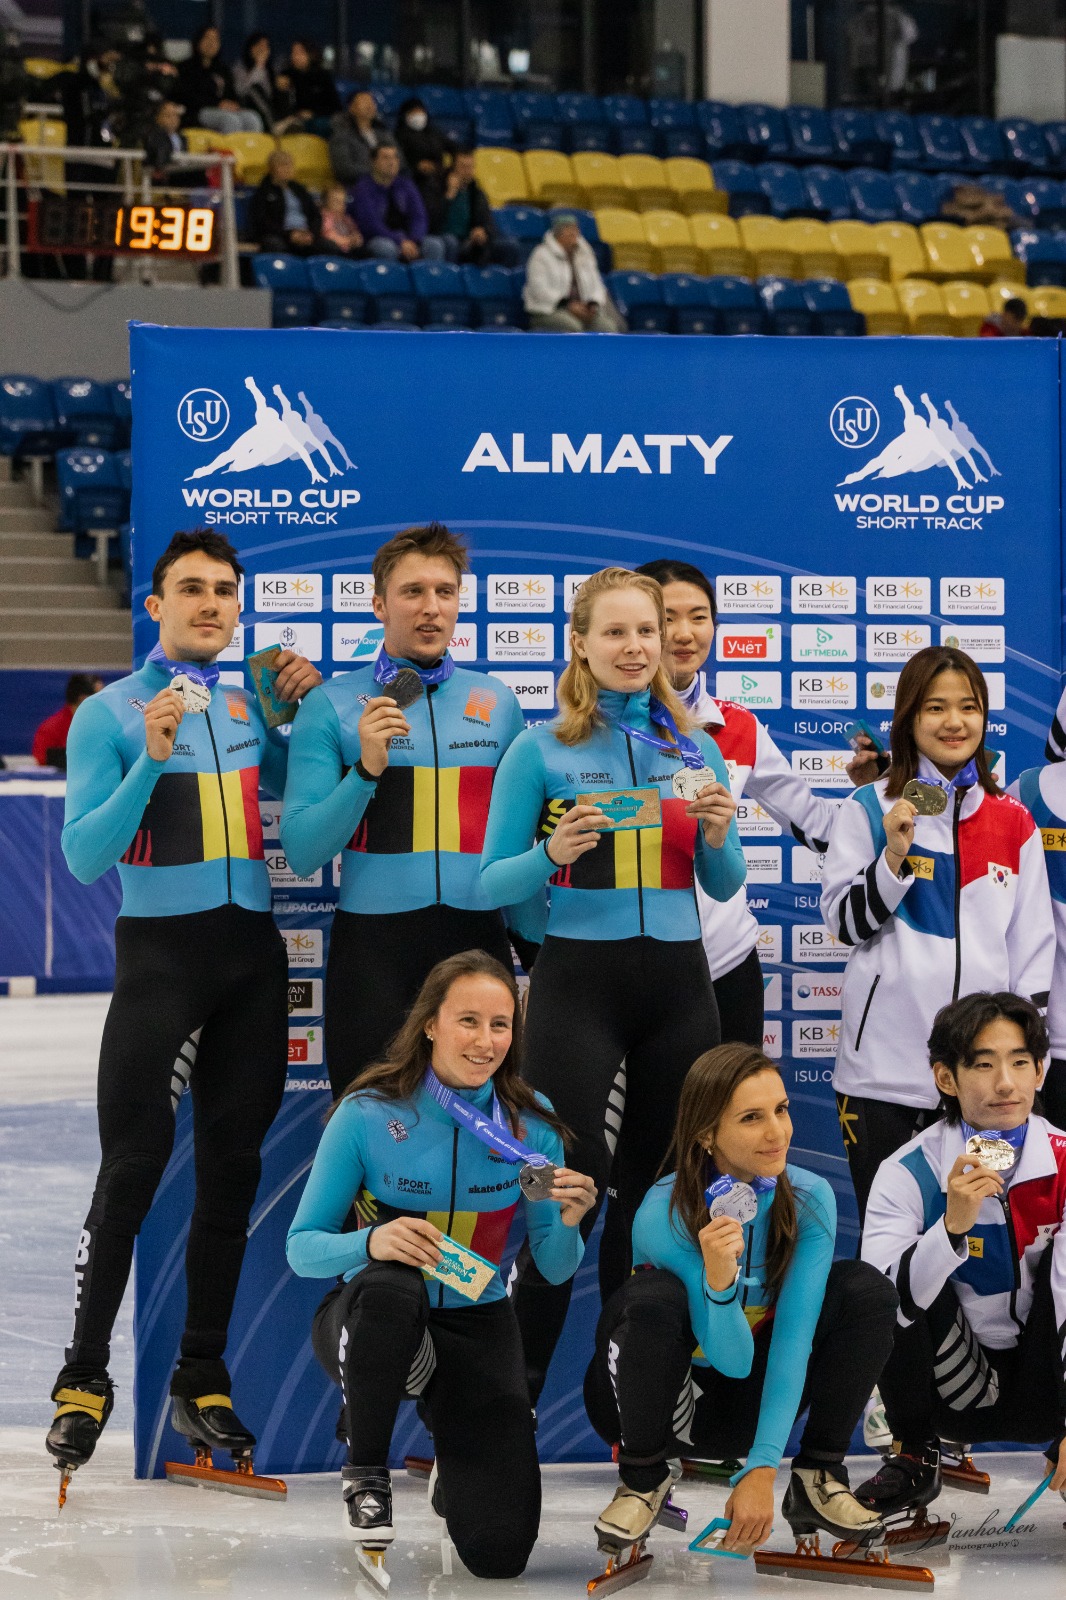 Drie keer zilver en één keer brons op World Cup 4 in Almaty